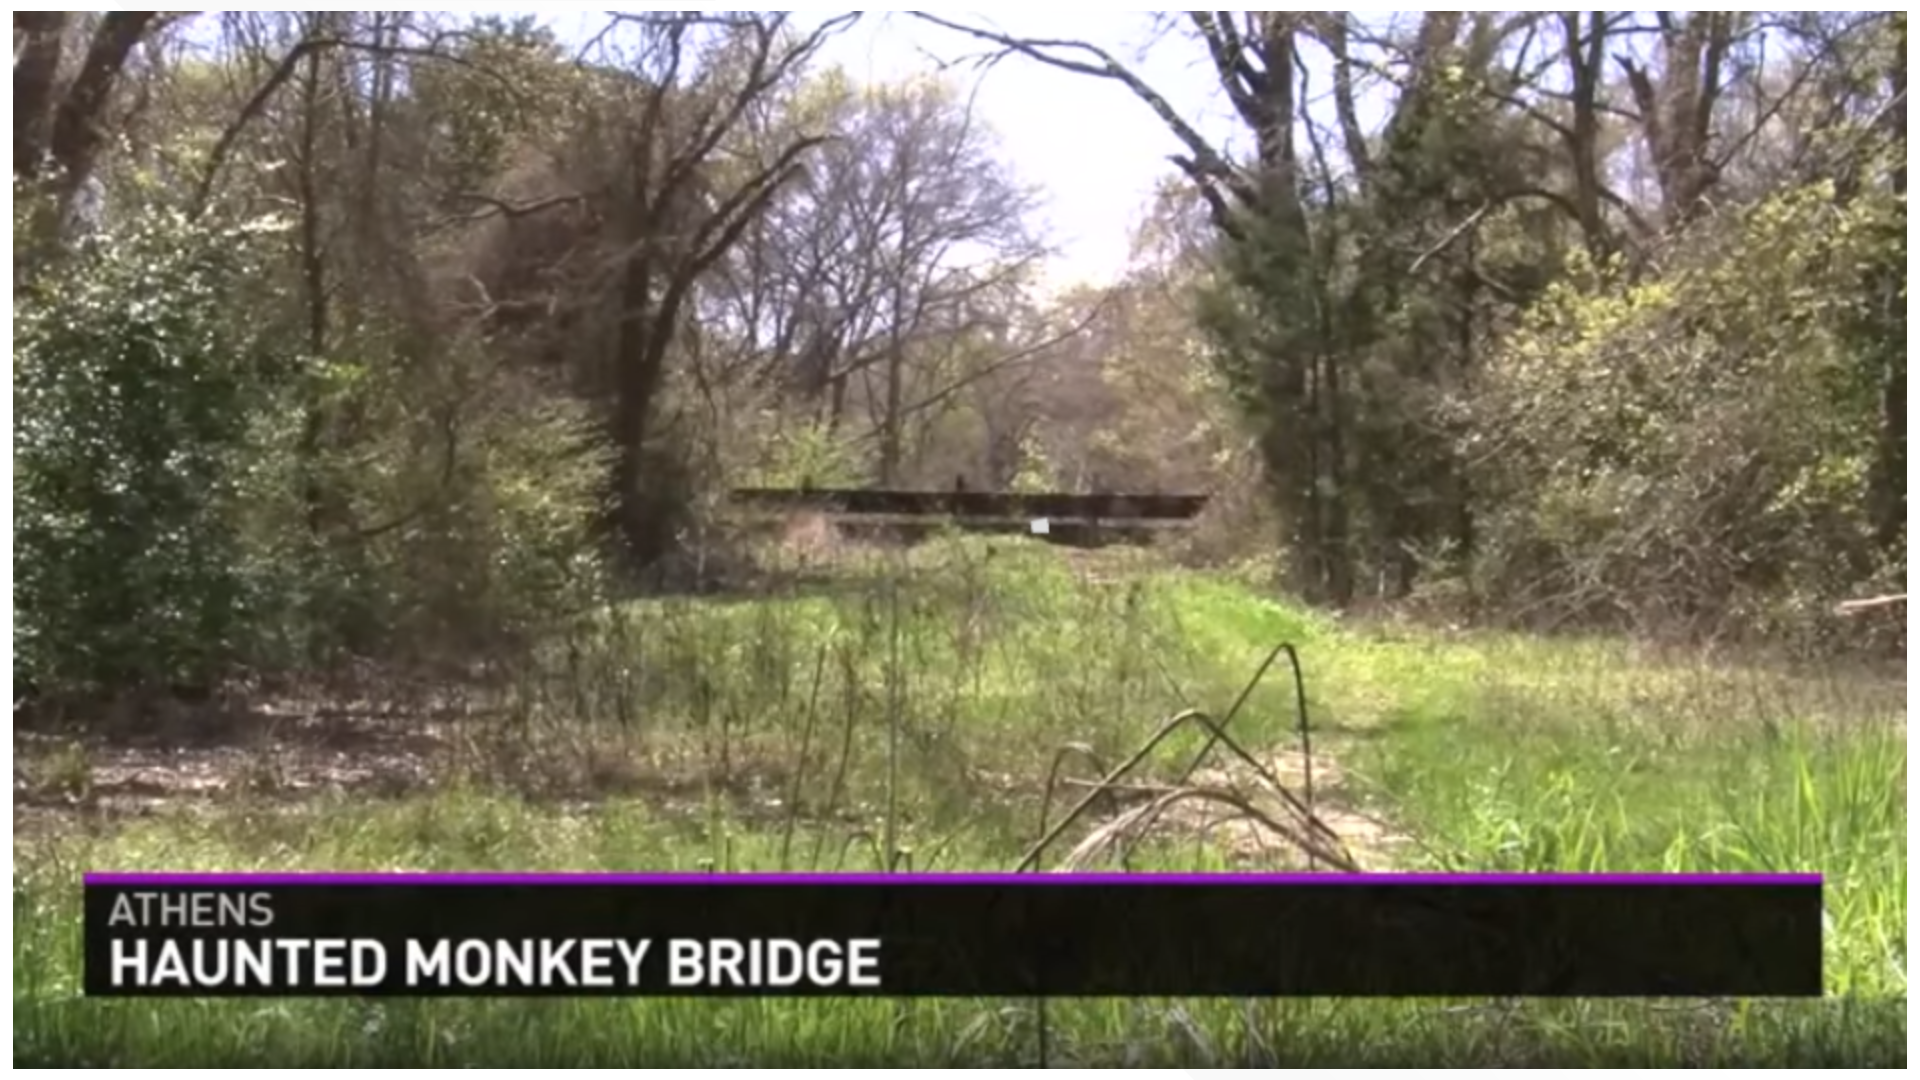 The legend of the Haunted Monkey Bridge